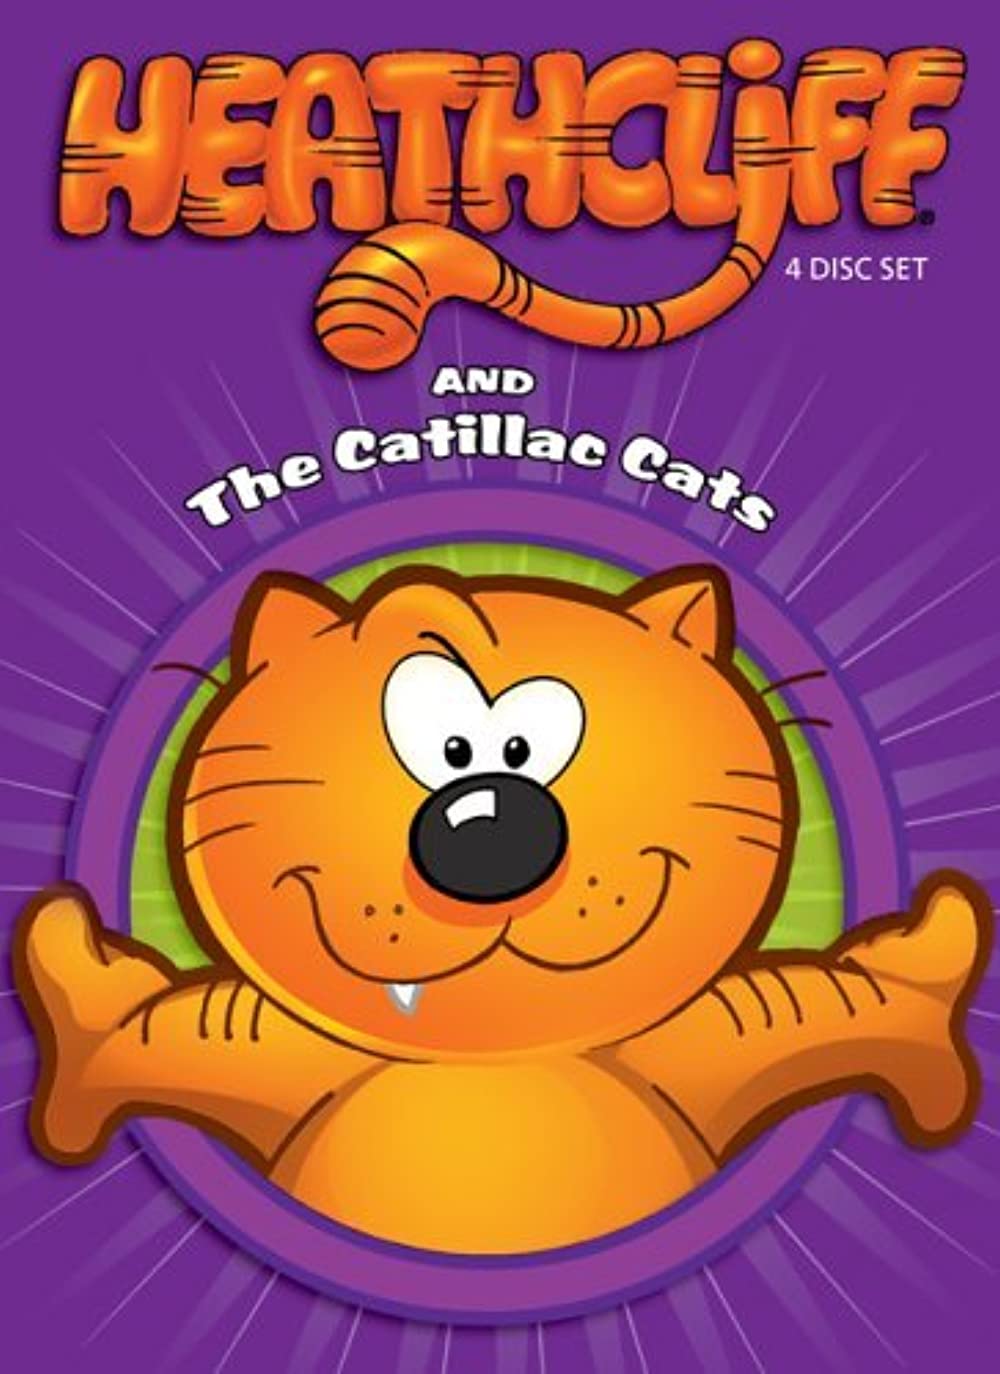 Heathcliff & the Catillac Cats (AKA Heathcliff & Co)